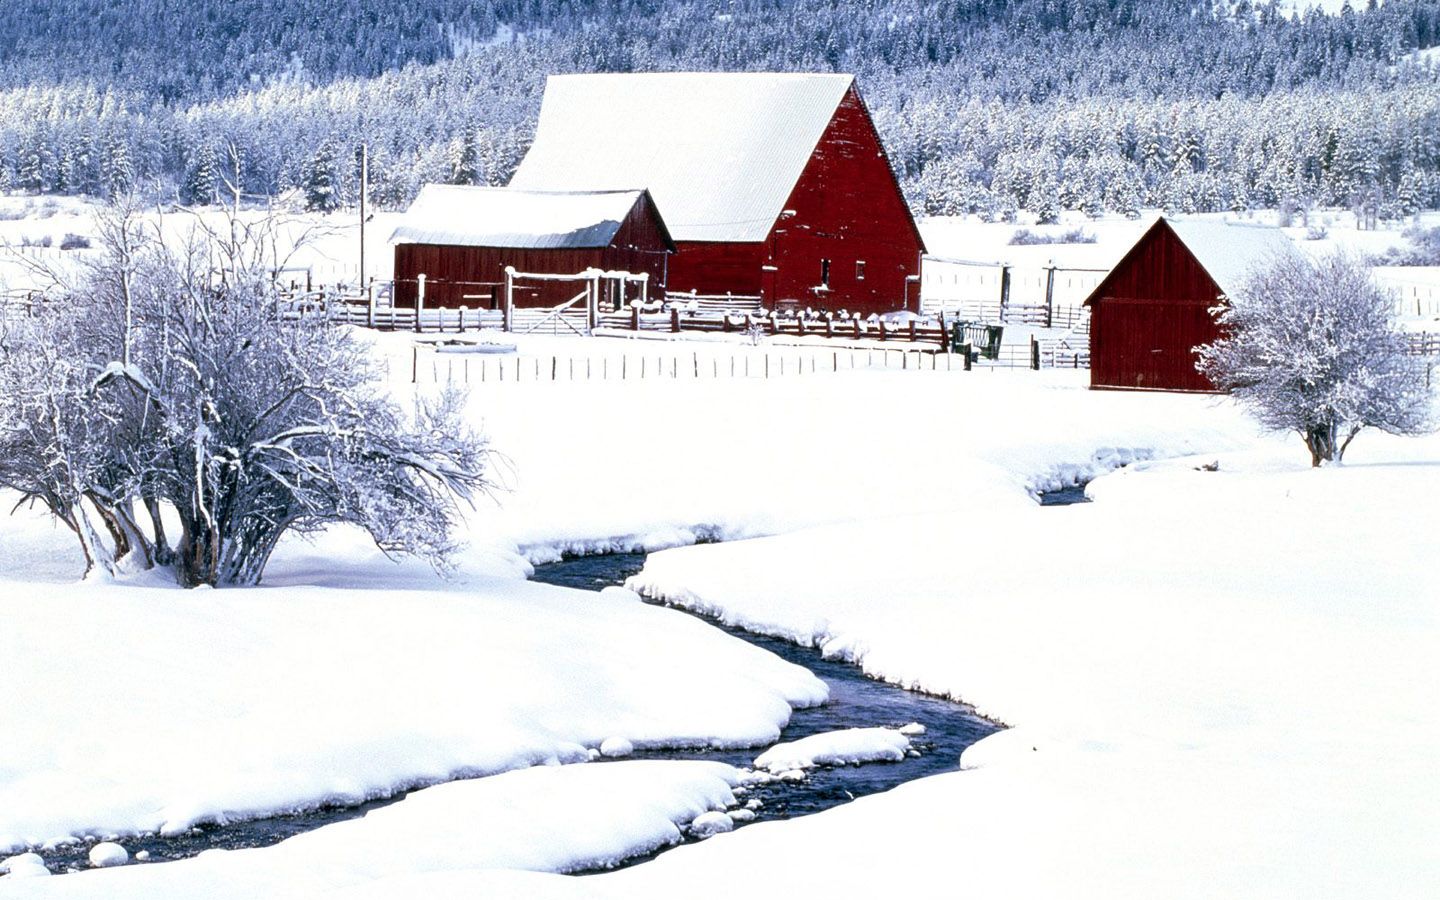 Winter Wonderland Barn In Snow